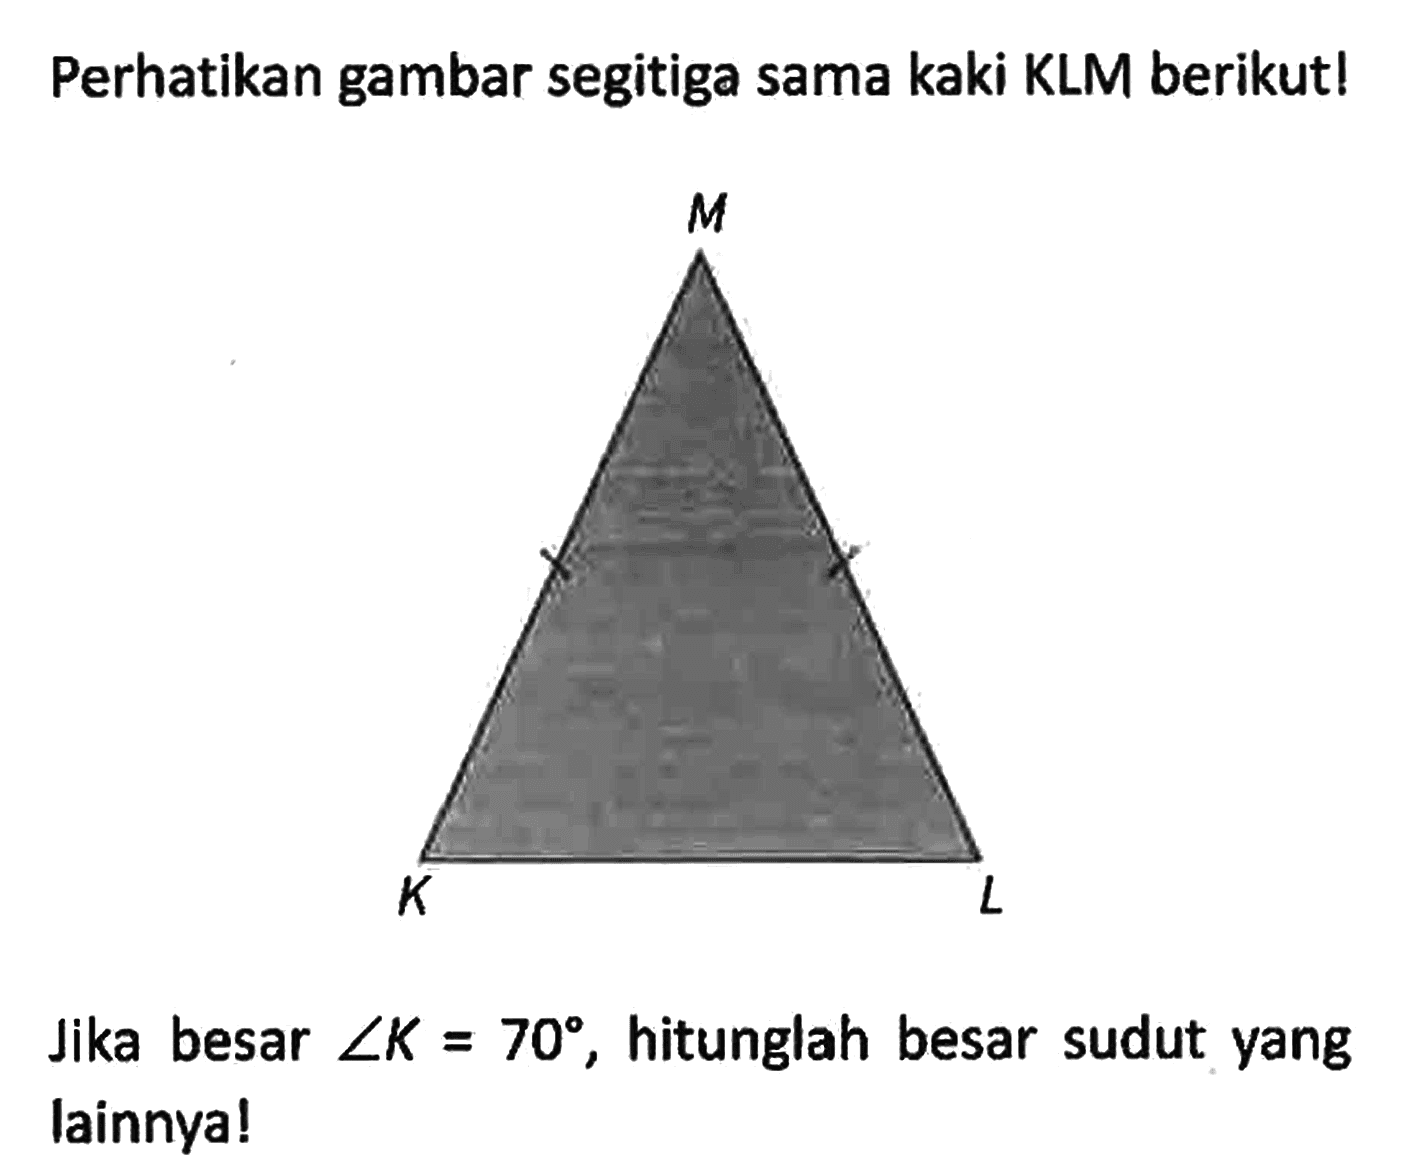 Perhatikan gambar segitiga sama kaki KLM berikut! K L M
Jika besar sudut K = 70, hitunglah besar sudut yang lainnya!